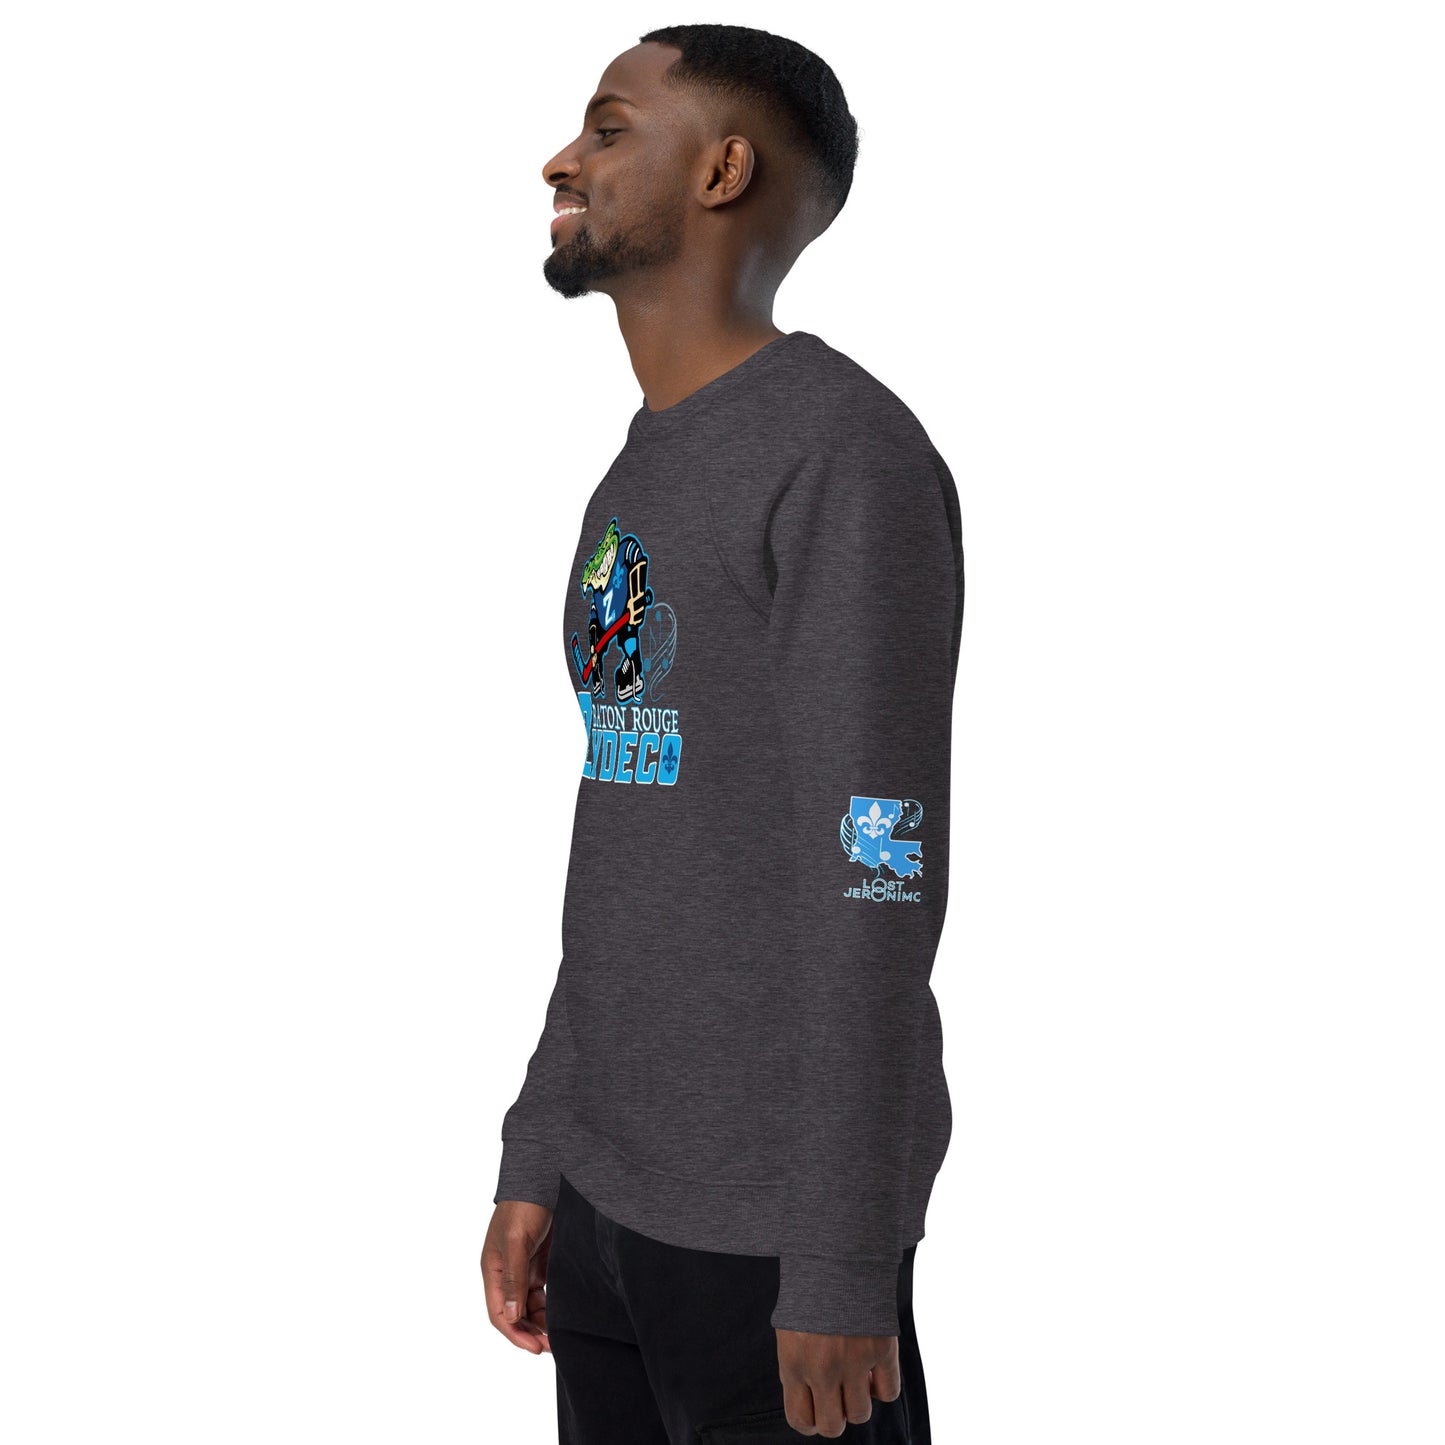 ZYDECO V1 - Unisex organic raglan sweatshirt